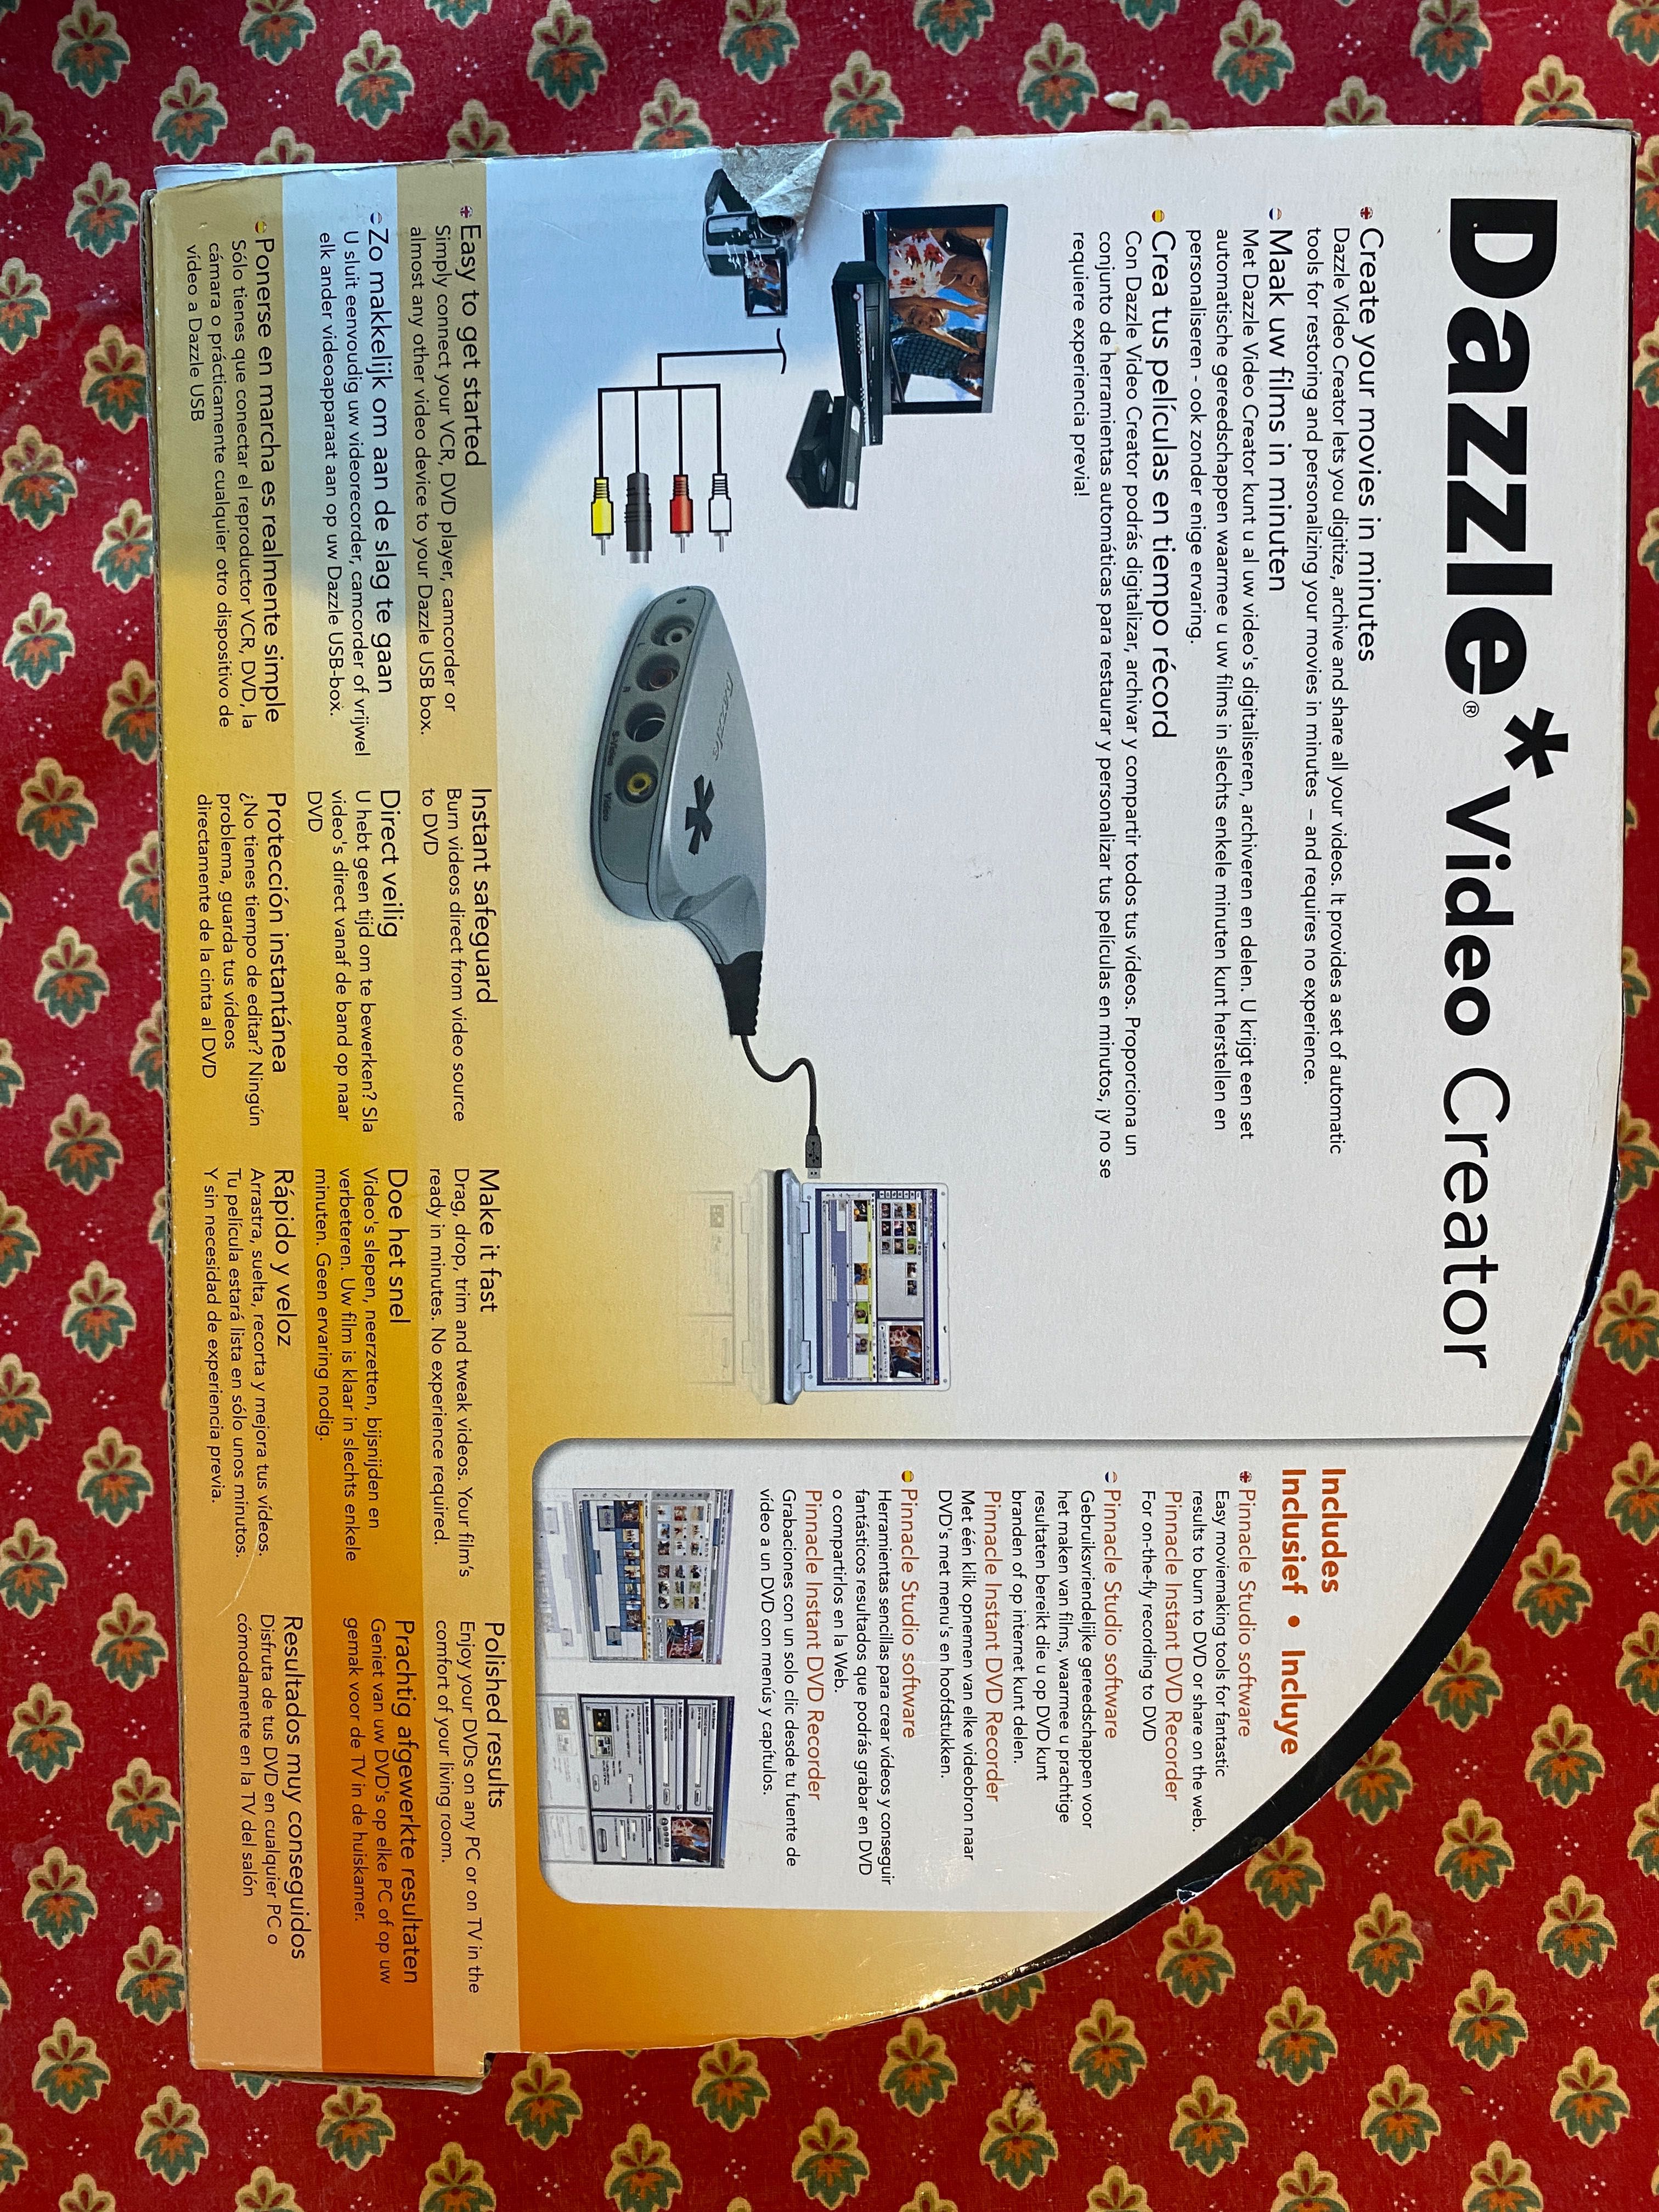 Pinnacle Dazzle DVD Recorder